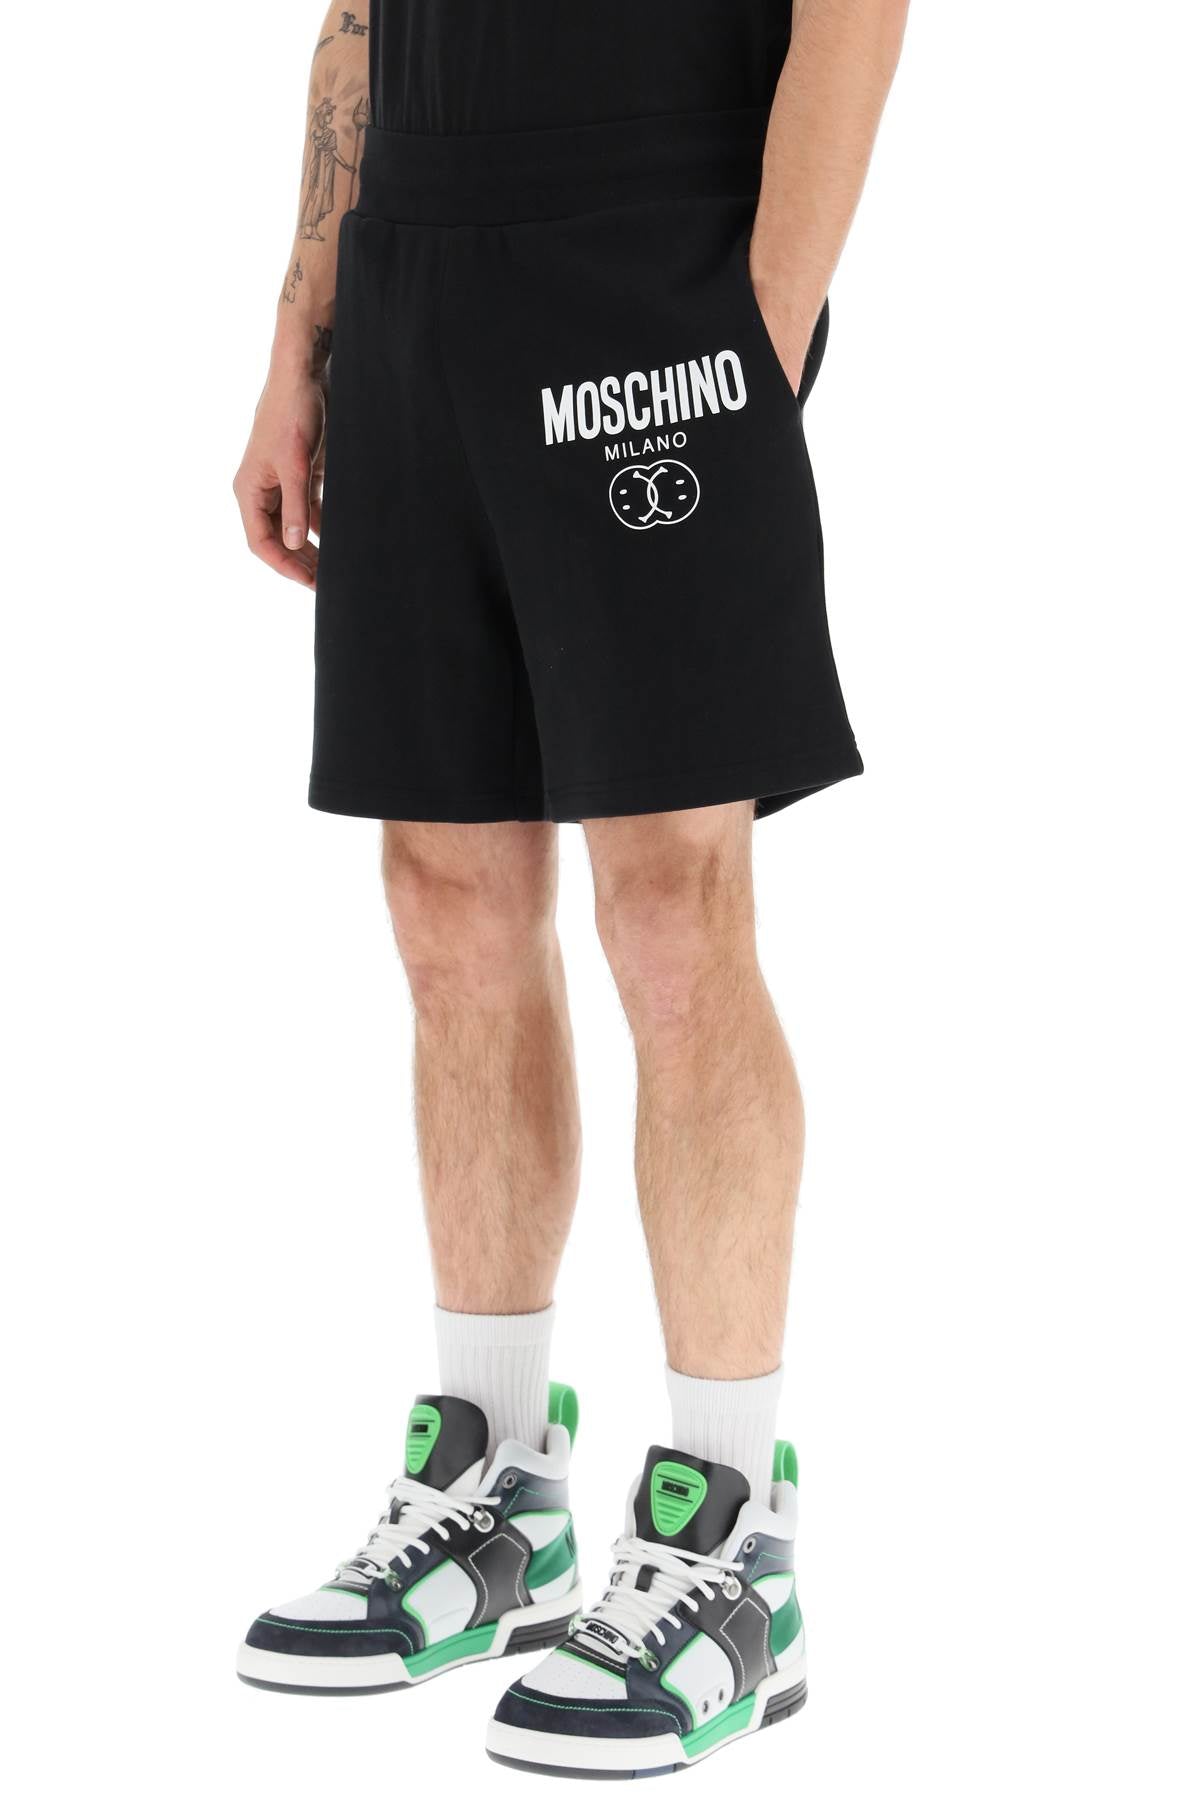 Moschino 'double question mark' logo sweatshorts-3